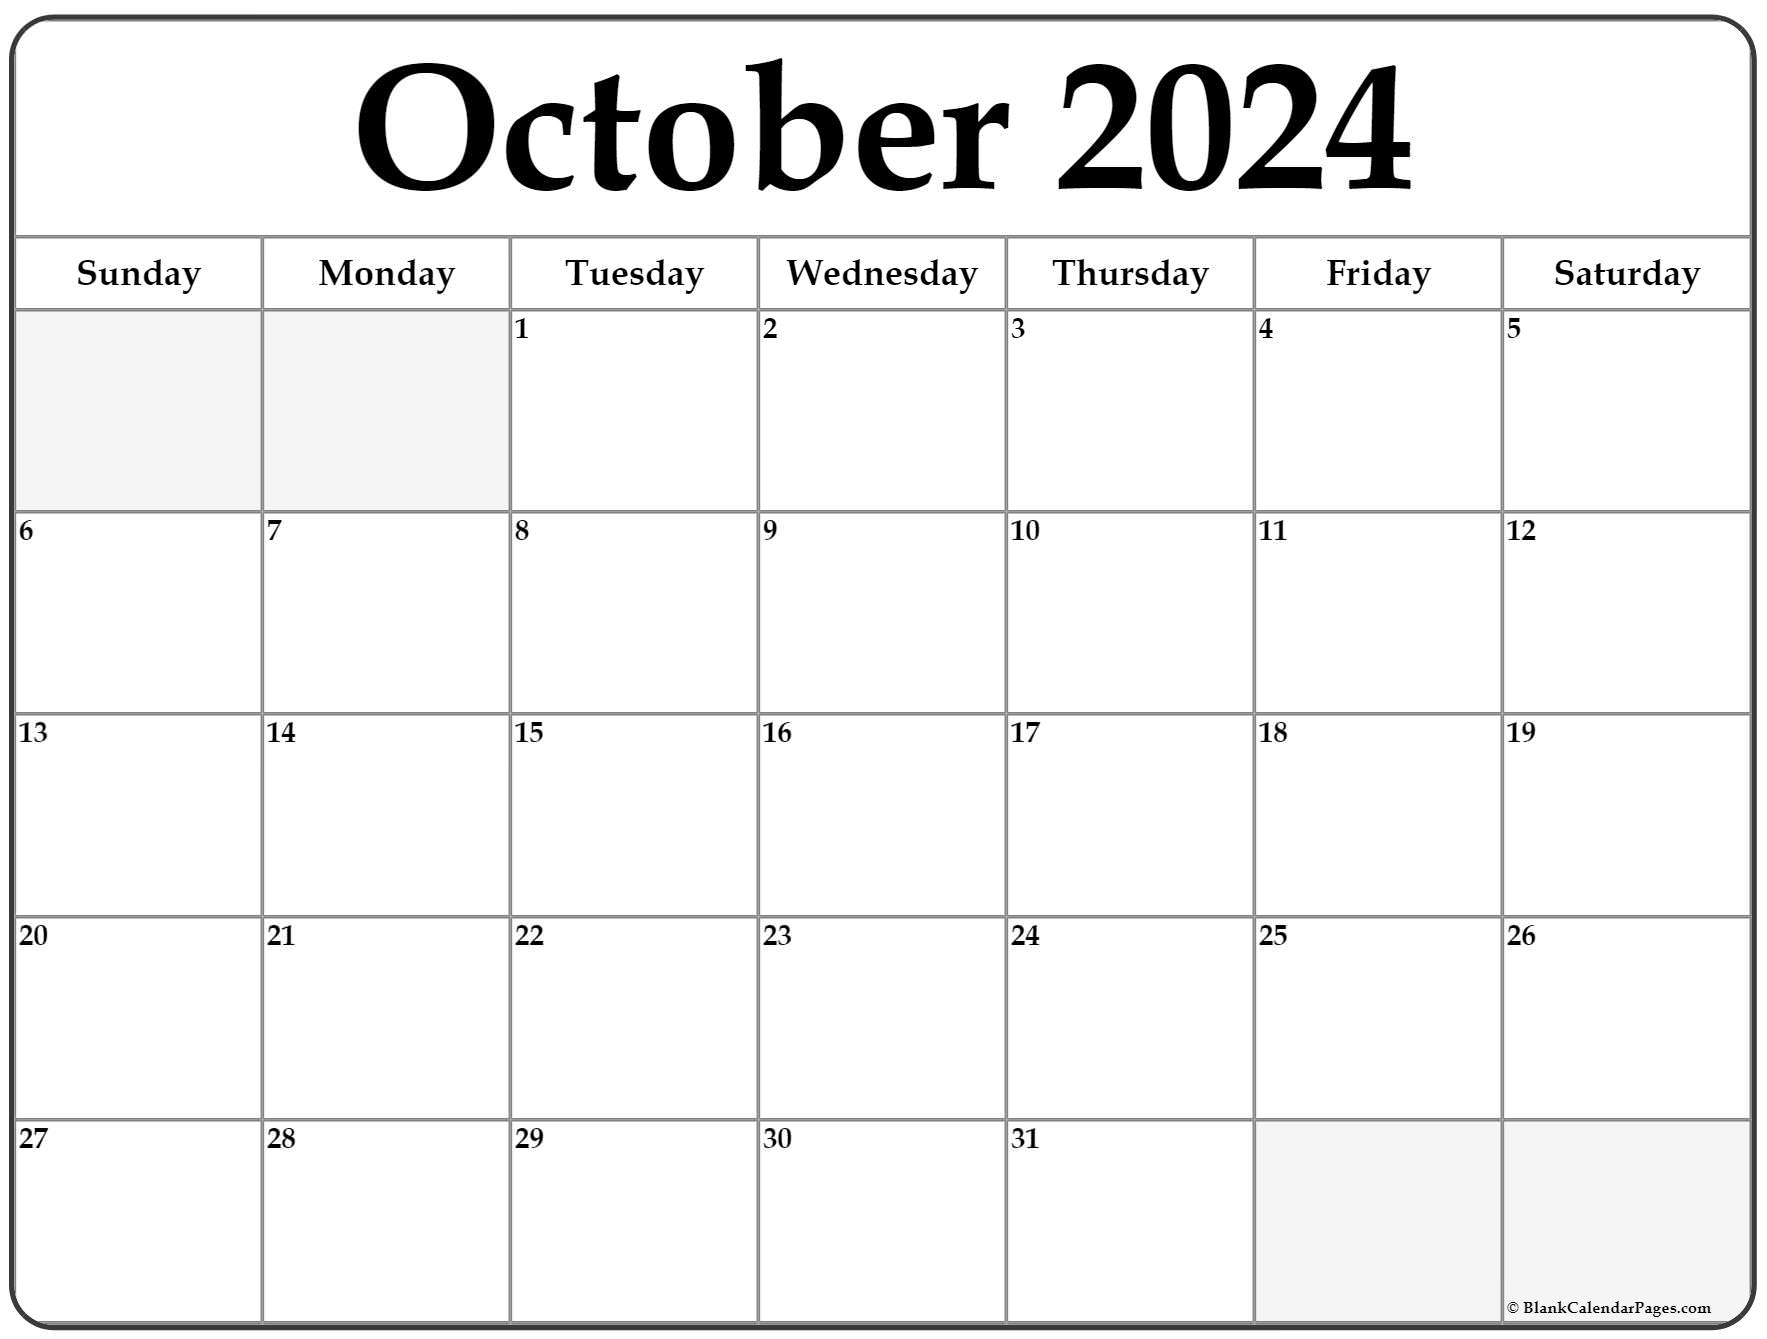 Free Printable October 2022 Calendar Template October 2022 Calendar | Free Printable Calendar Templates